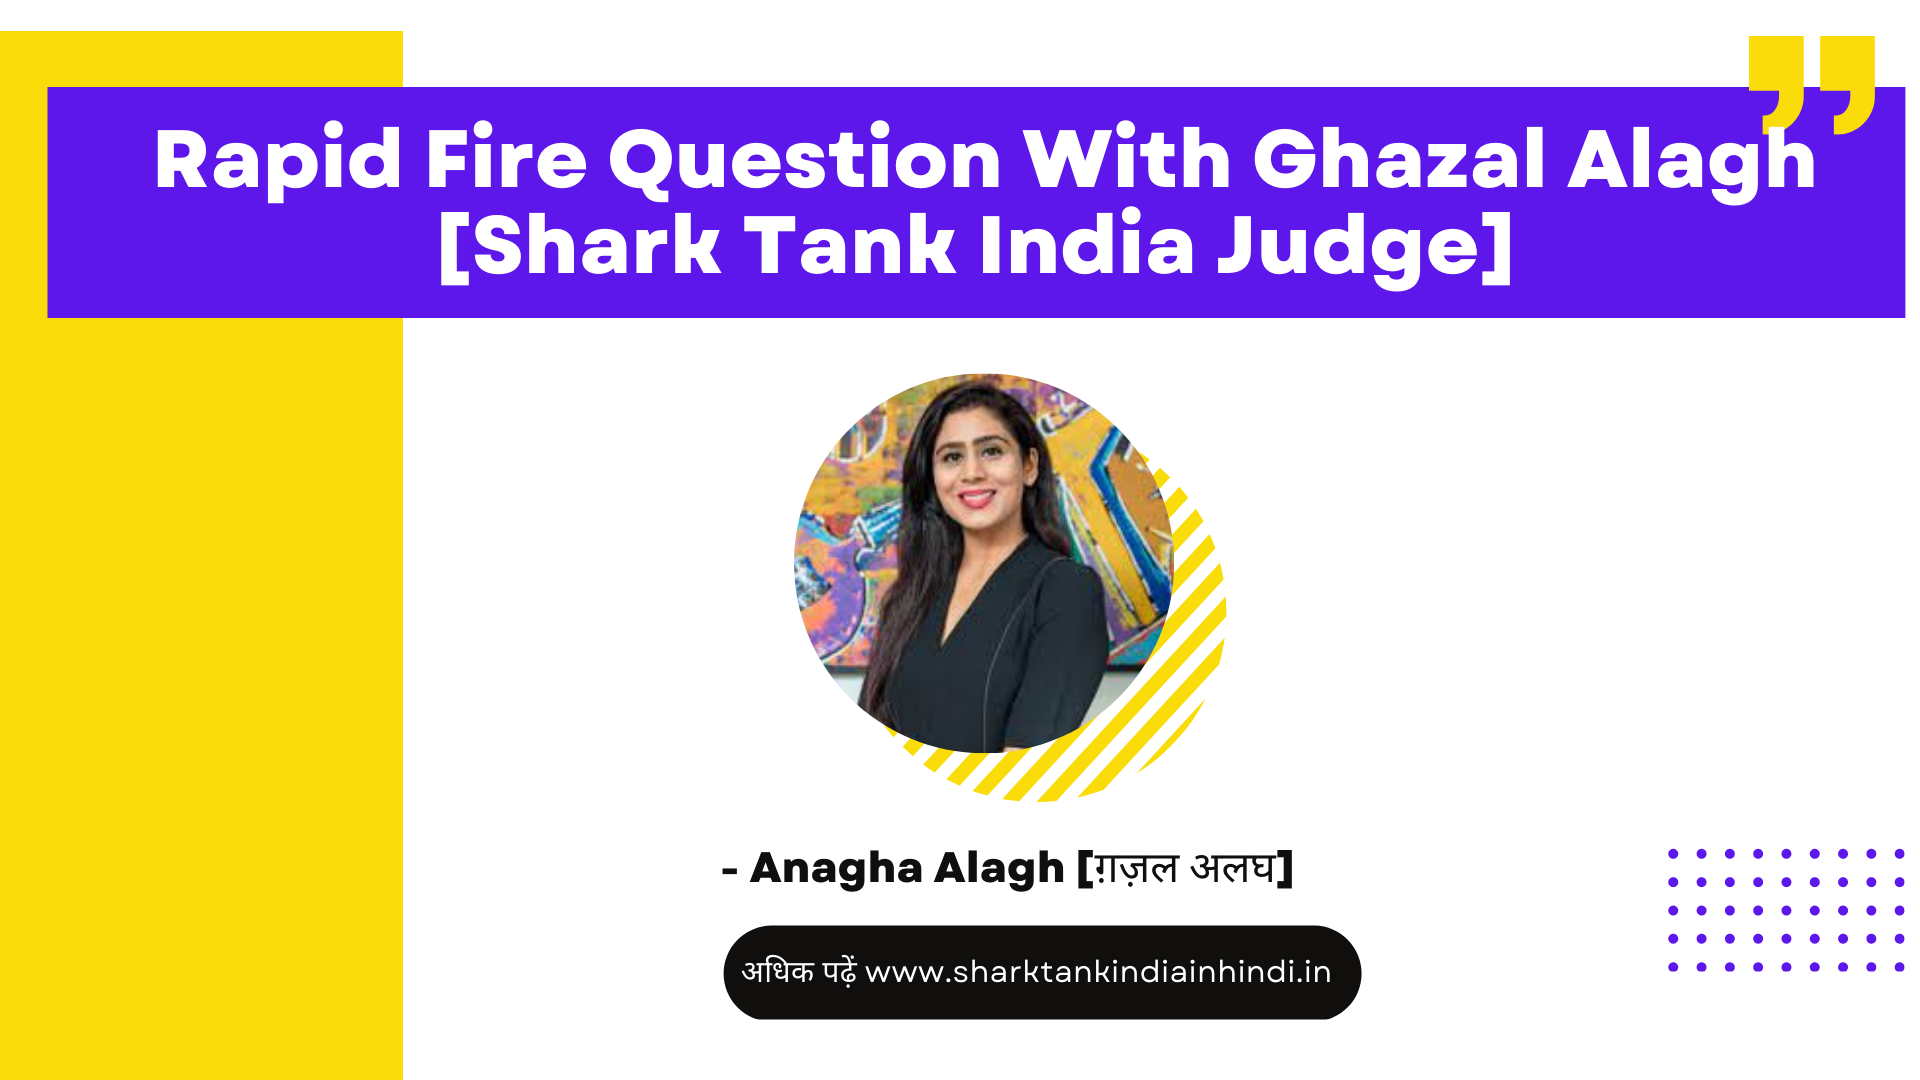 Shark tank india judges rapid fire